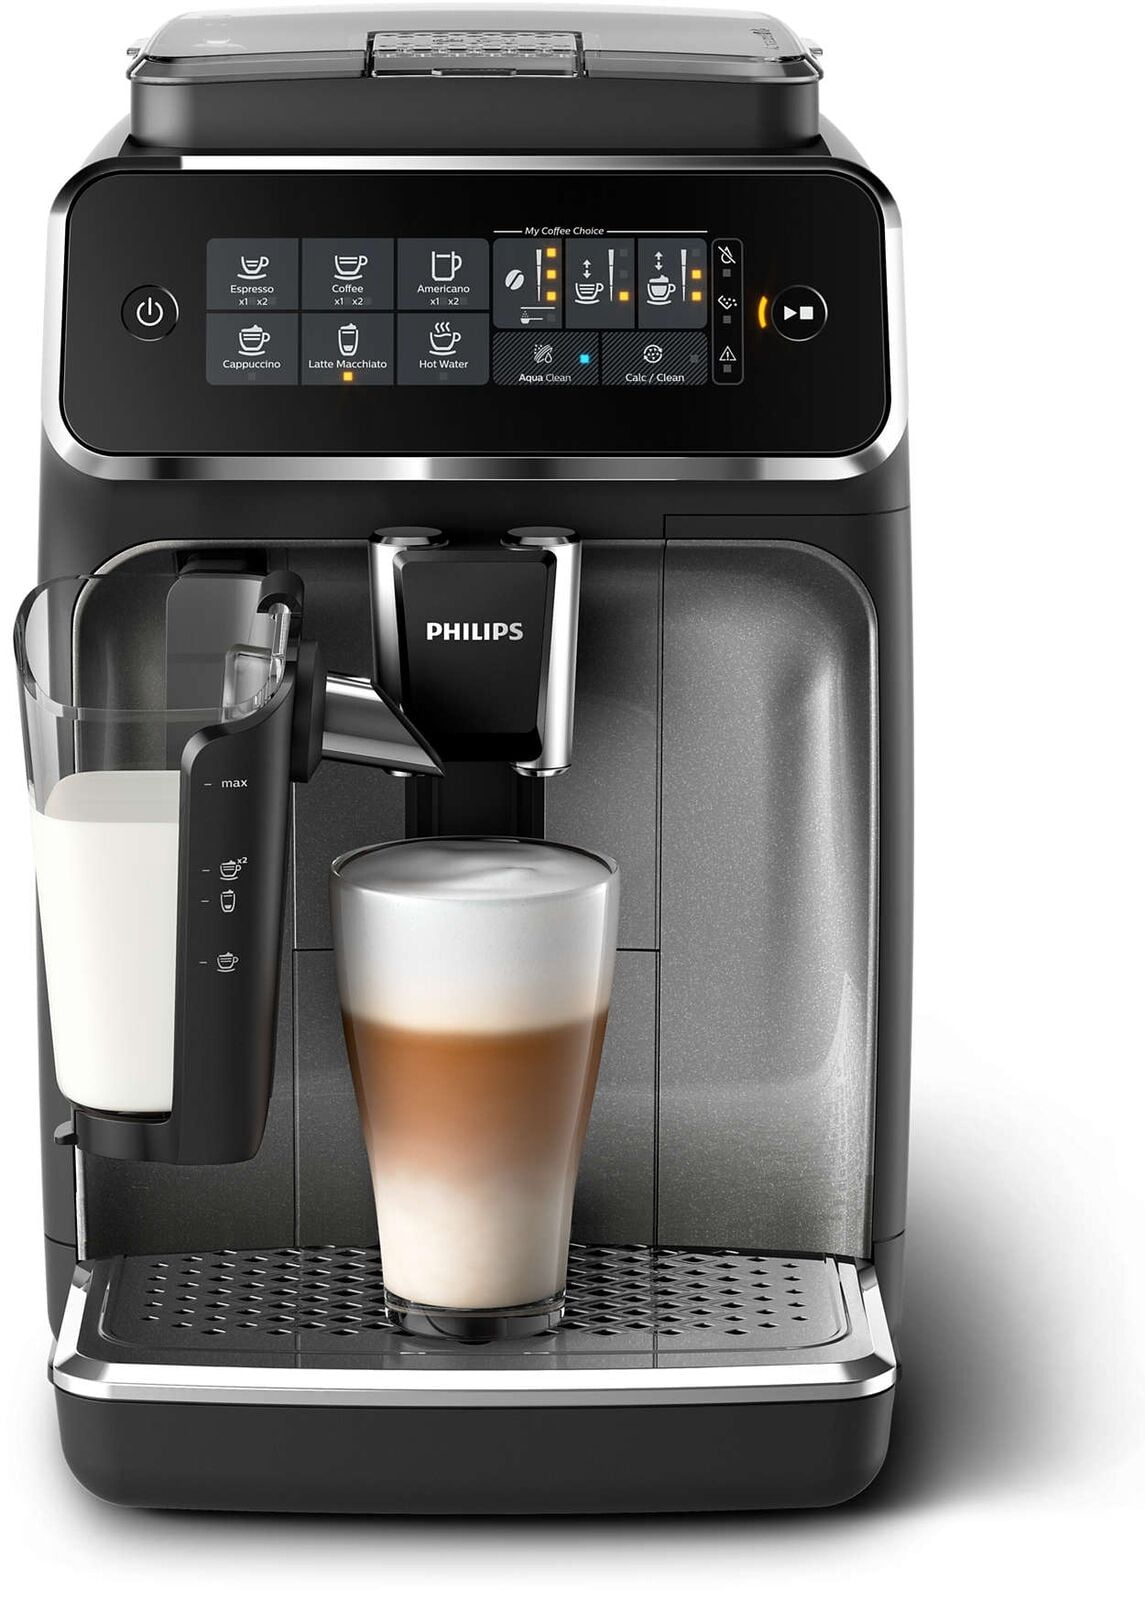  PHILIPS 3200 Series Fully Automatic Espresso Machine